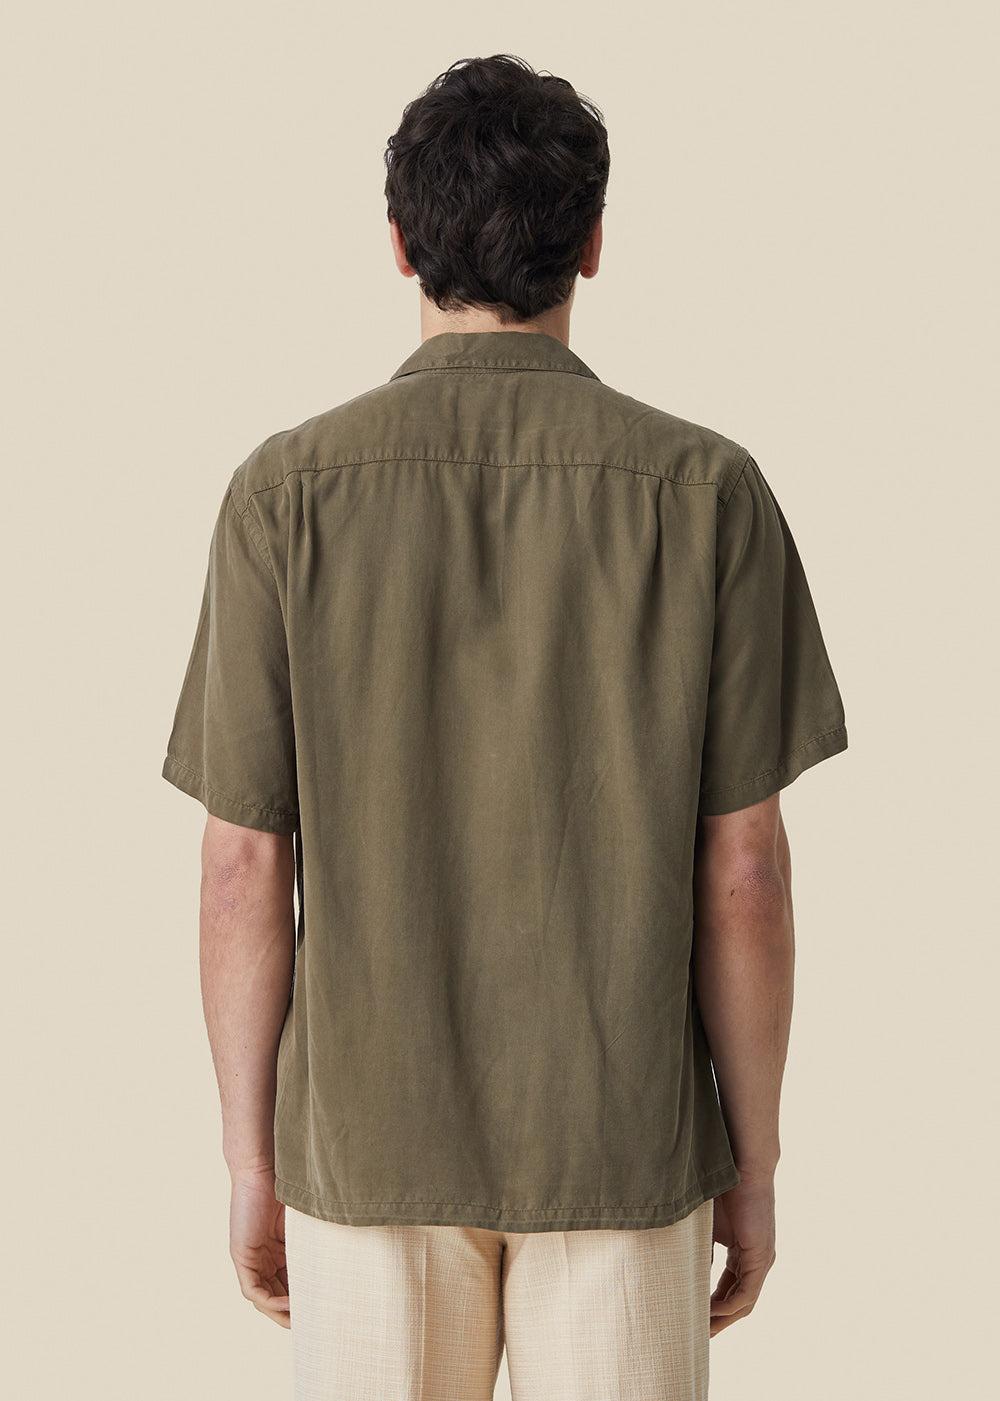 Dogtown Shirt - Olive - Portuguese Flannel Canada - Danali